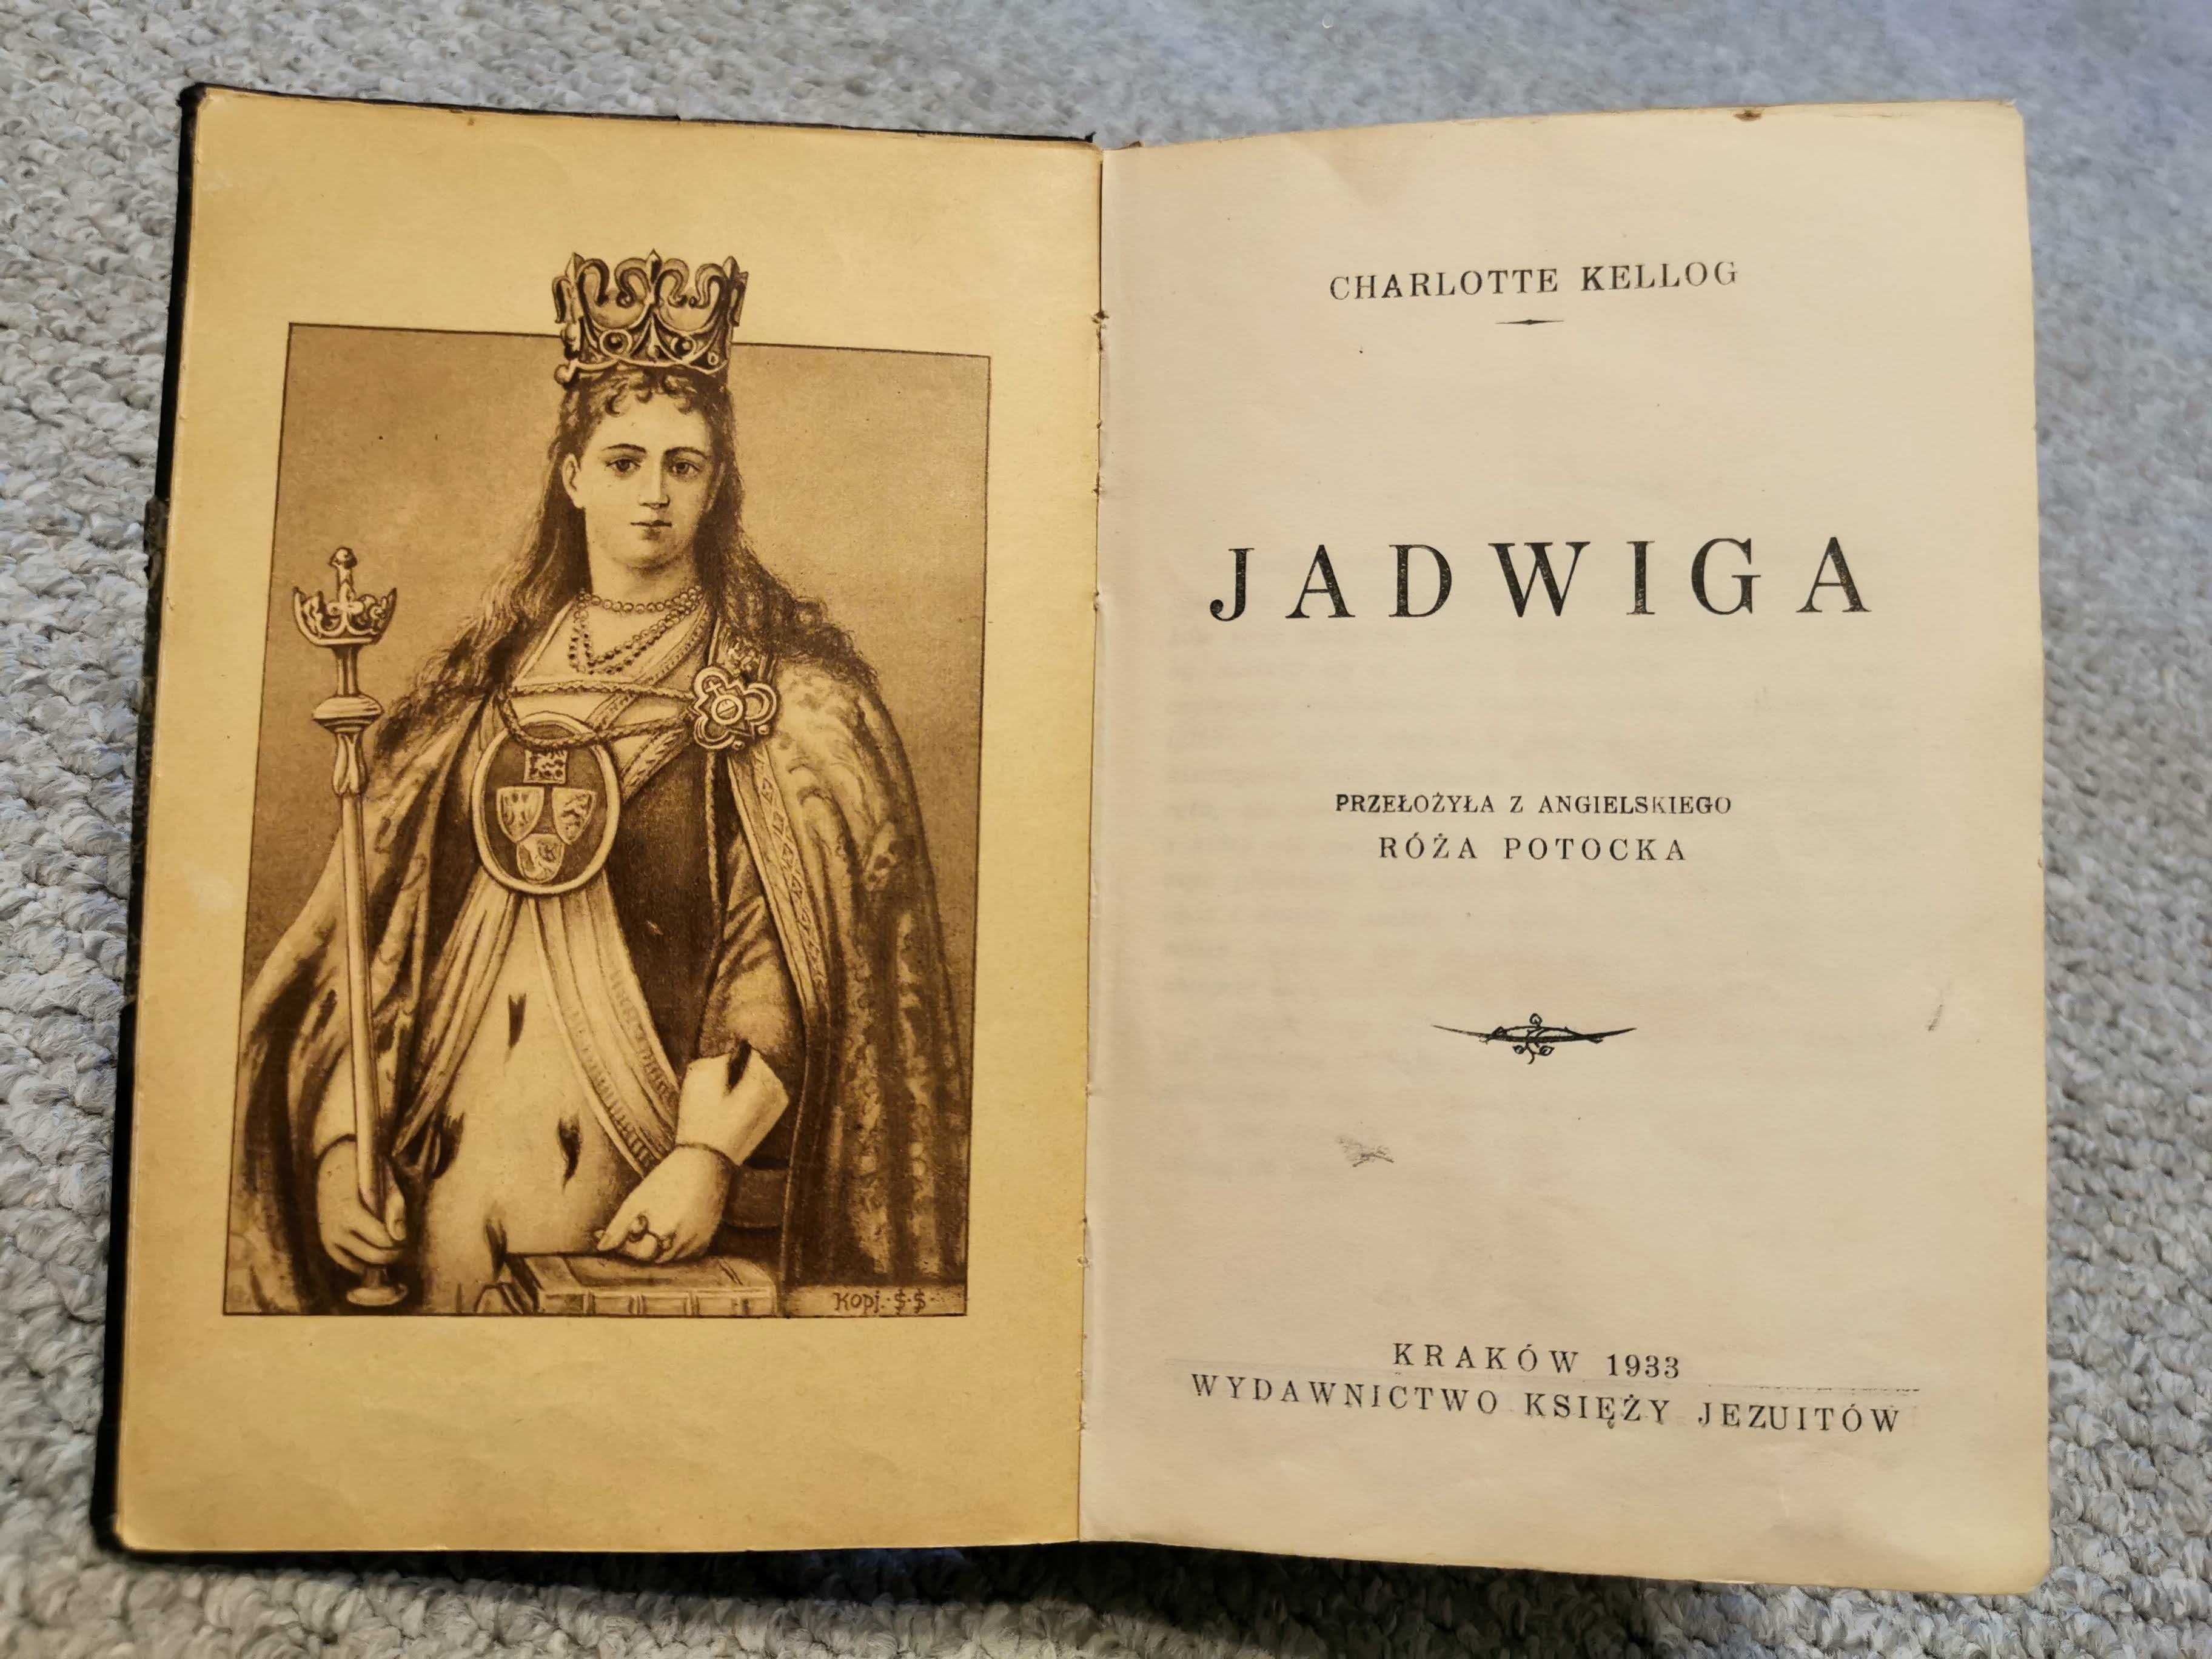 JADWIGA - Charlotte Kellog - Wyd. Ks. Jezuitów Kraków 1933 r.